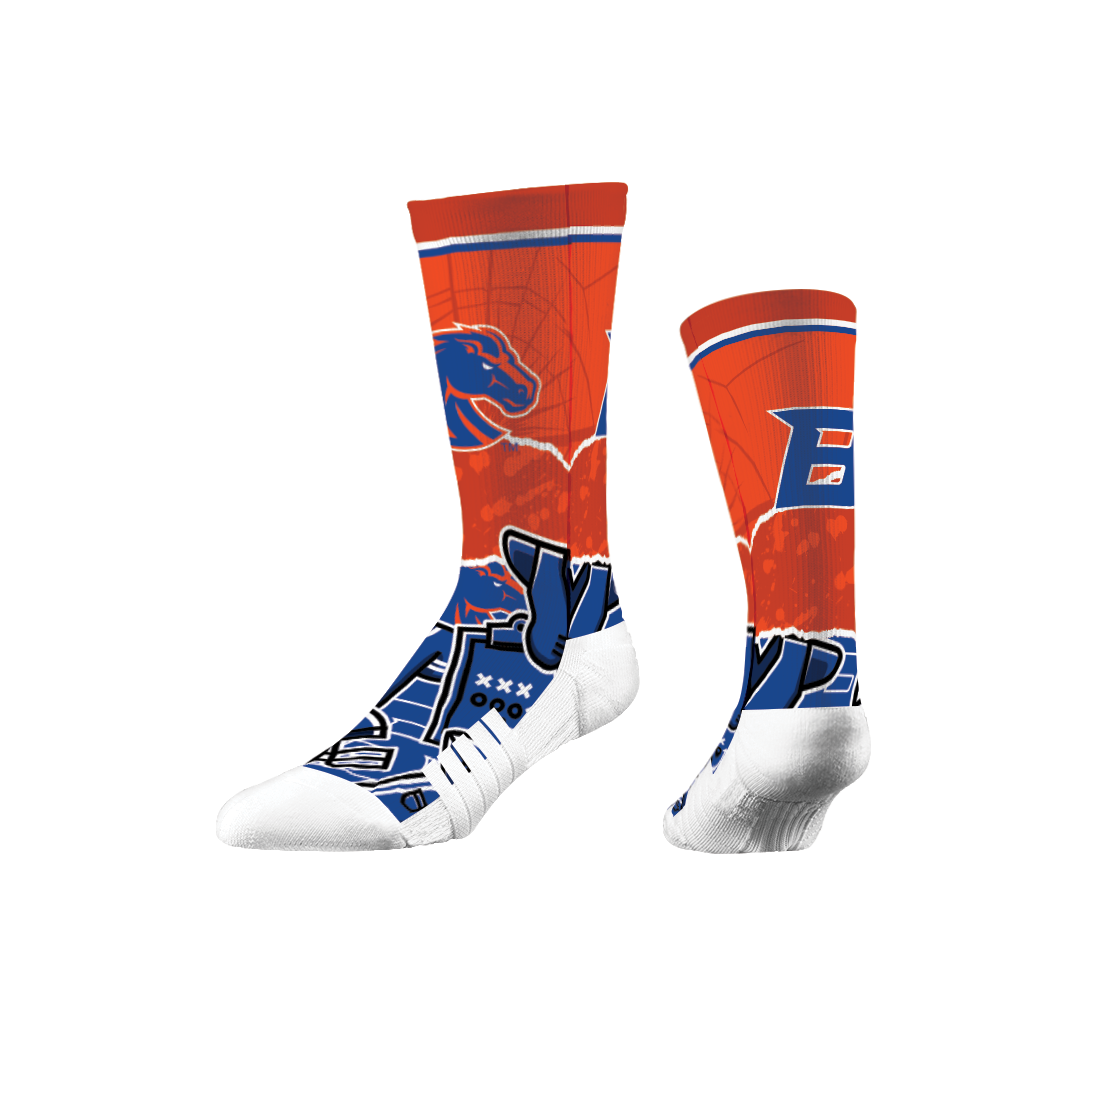 Boise State Broncos Strideline Crew Socks (Orange/Blue)